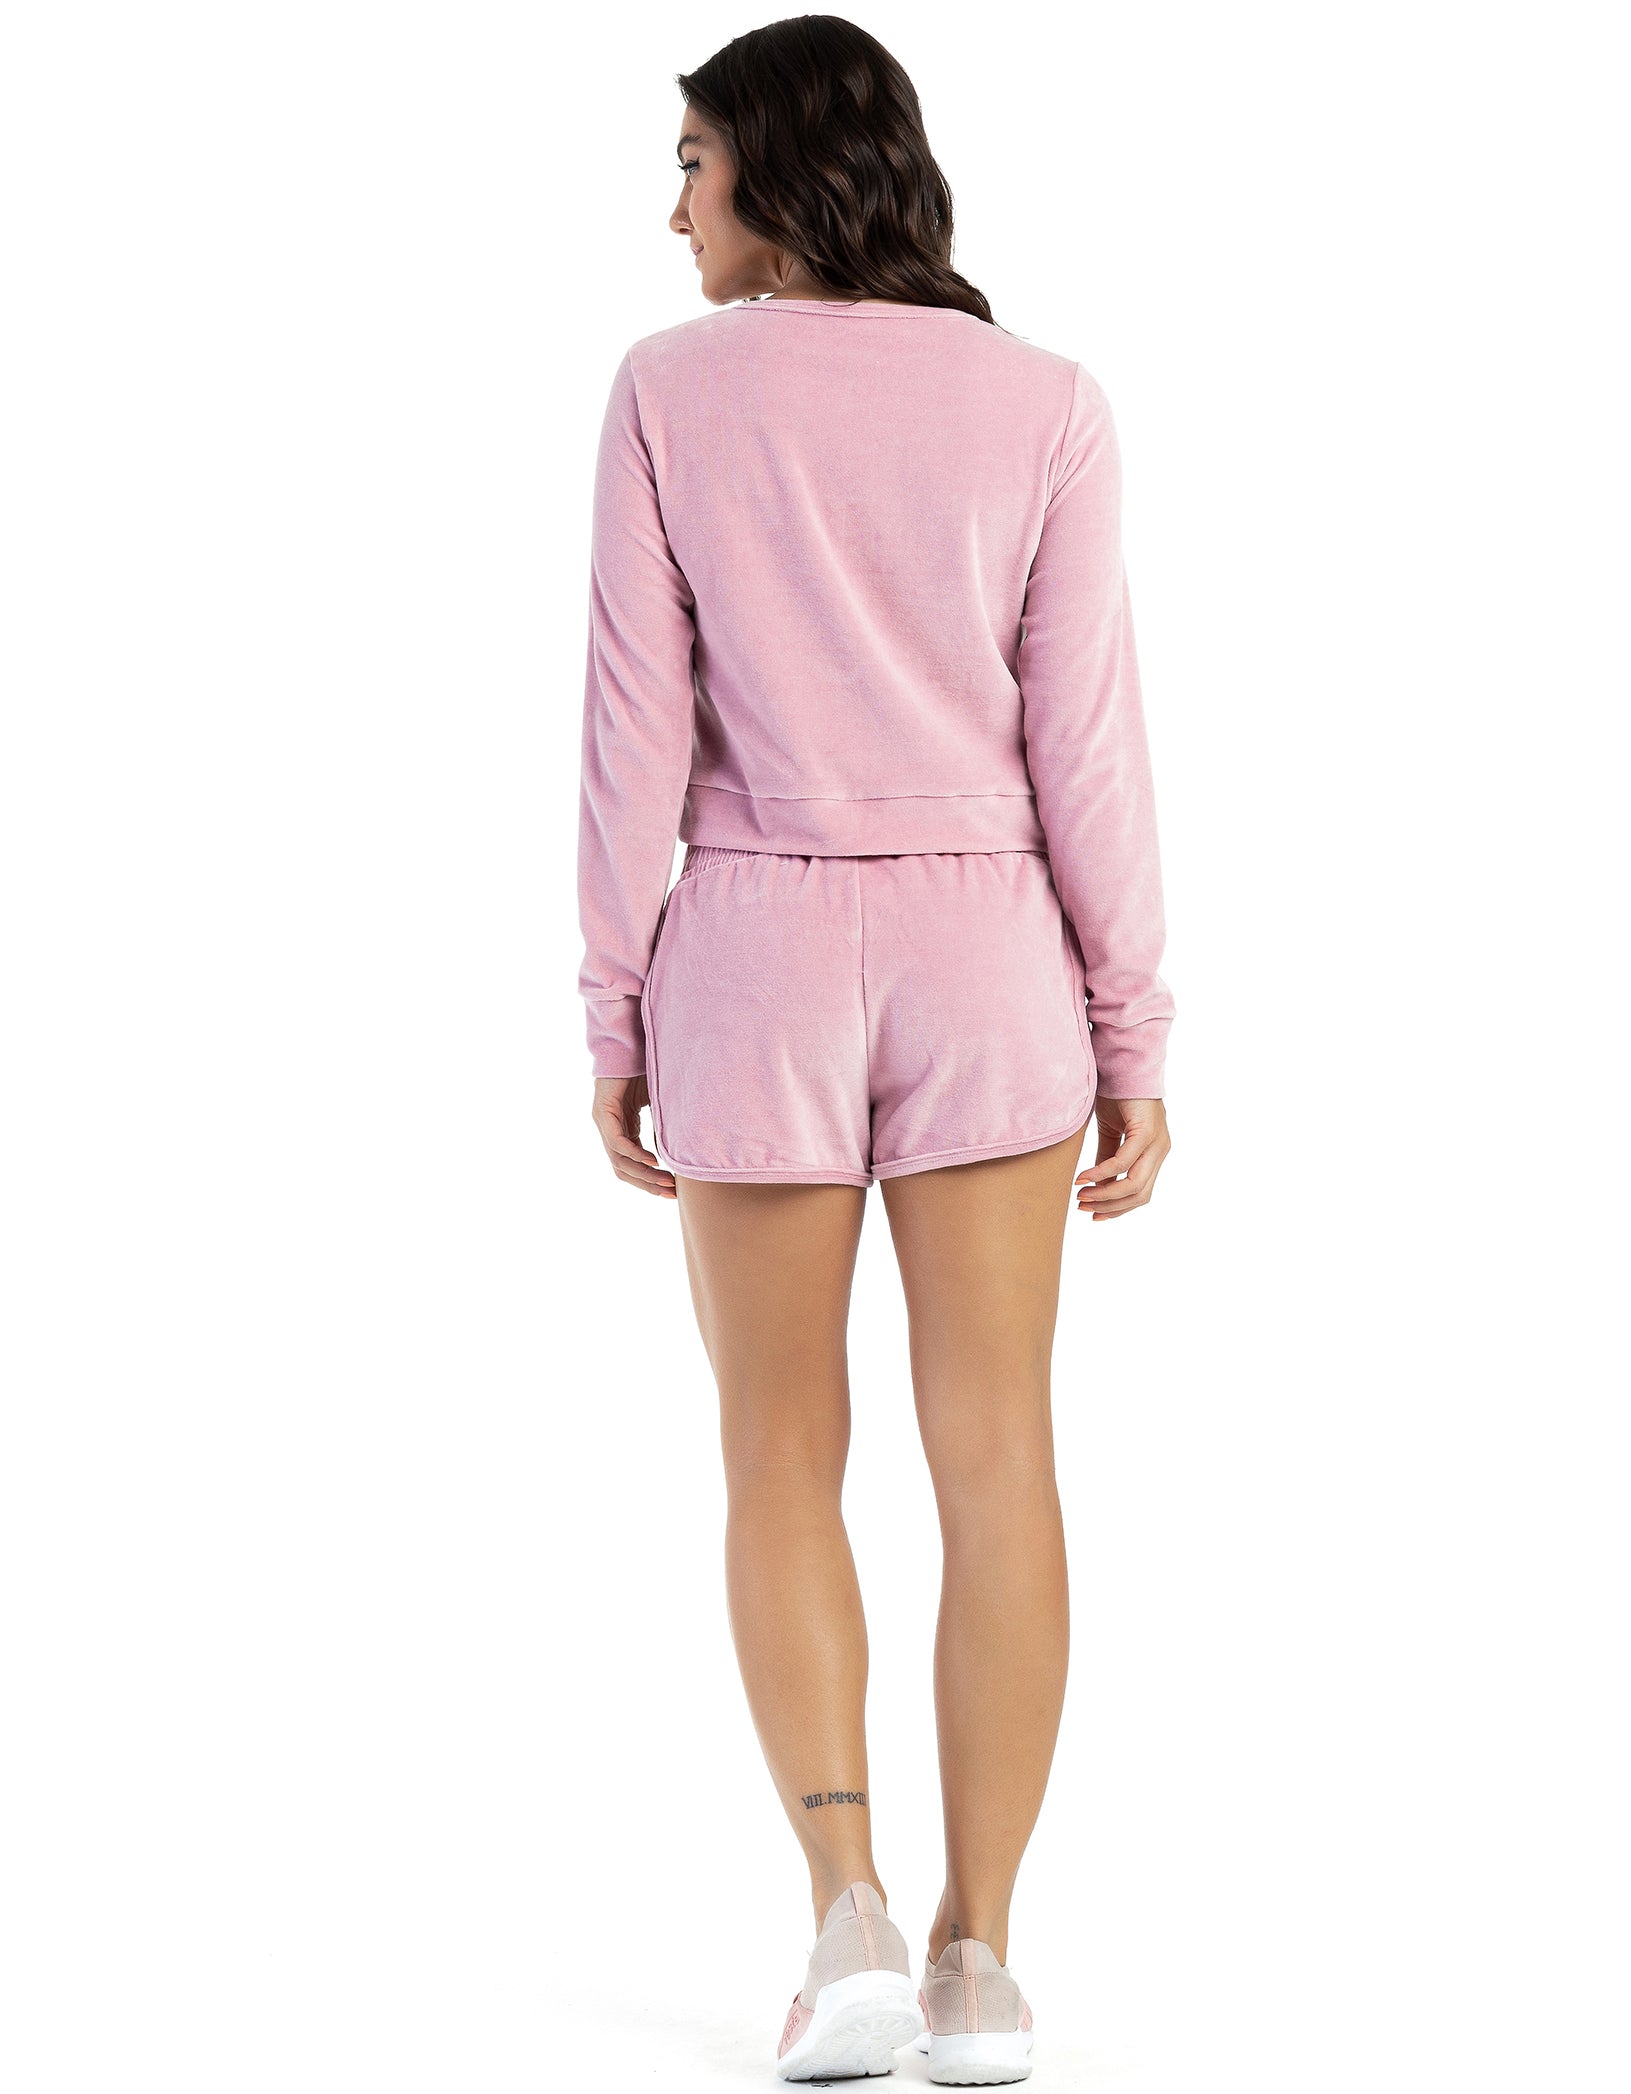 Vestem - Montana Pink Romance Shorts - SH413.C0243